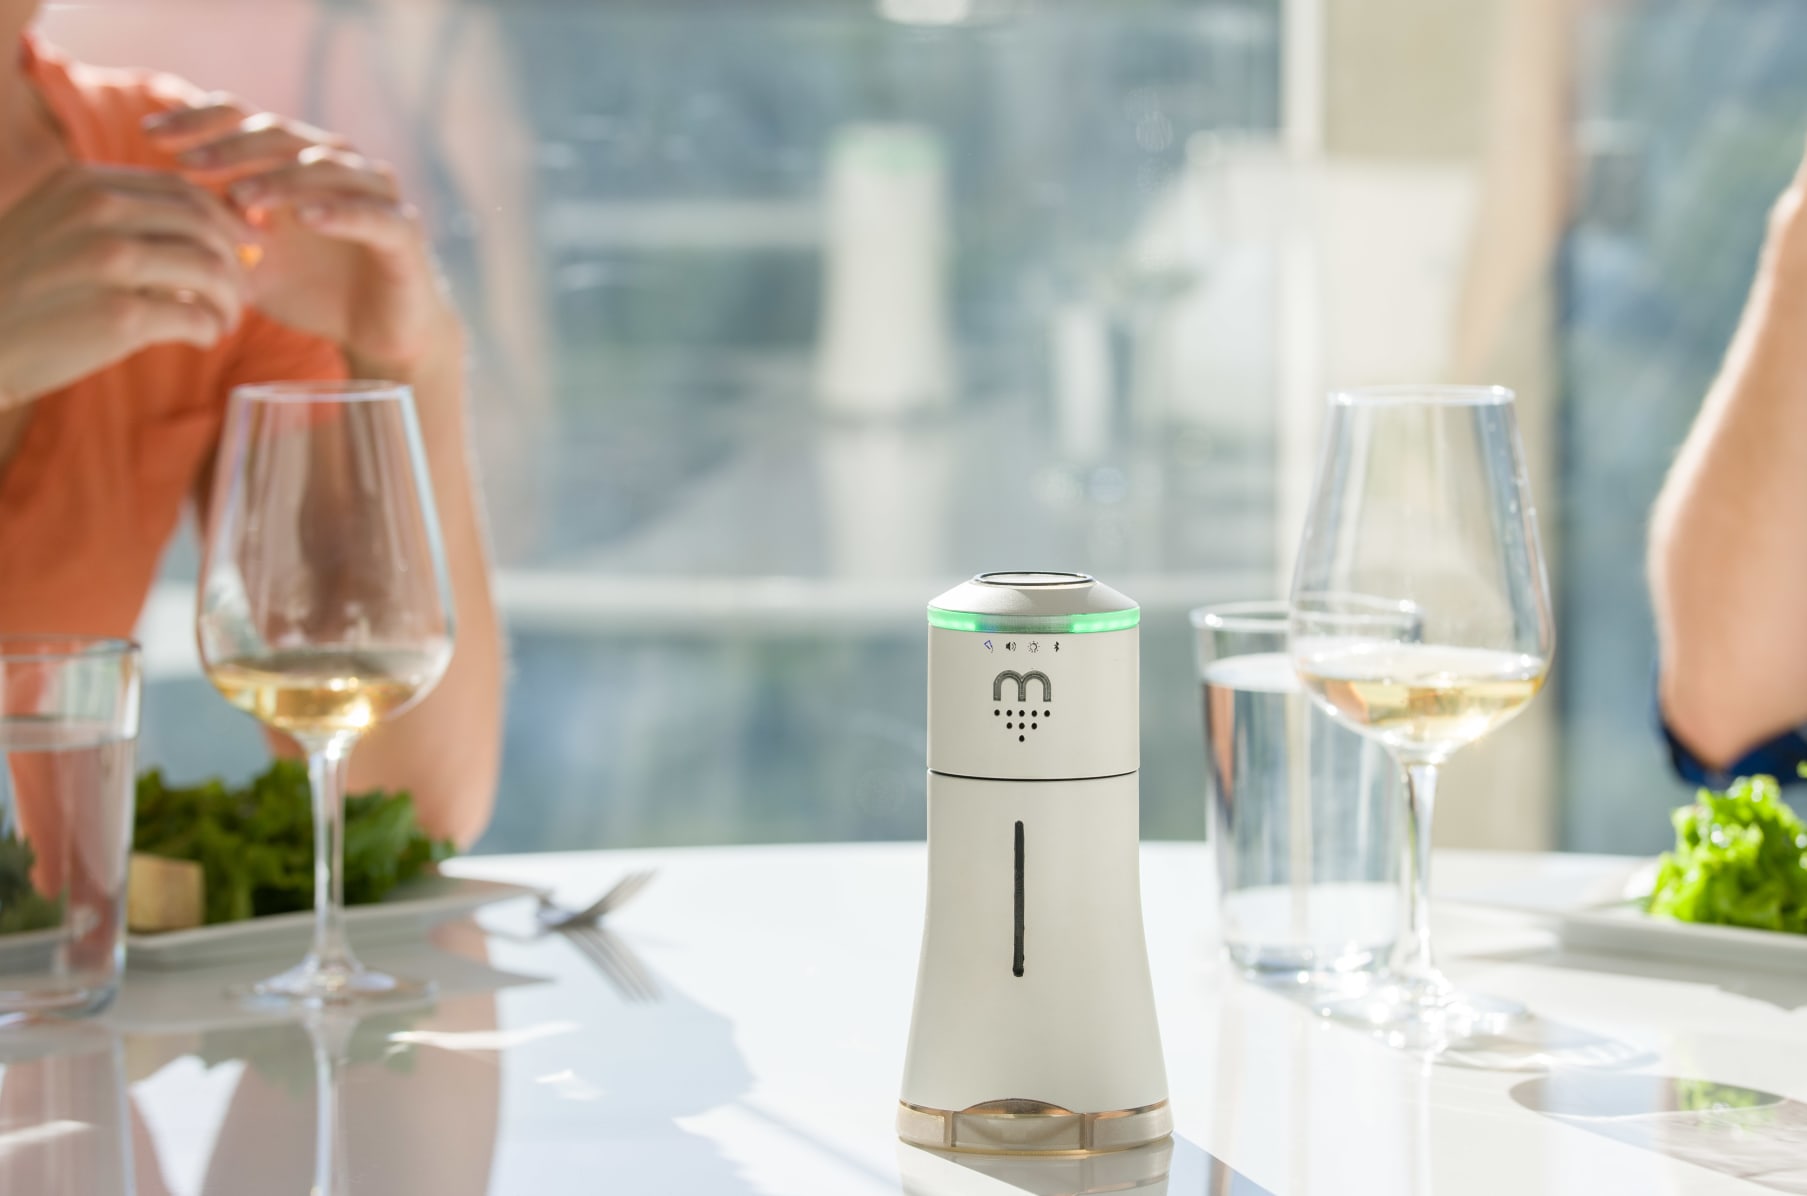 Finally, someone combines a salt shaker, Bluetooth speaker and mood lighting